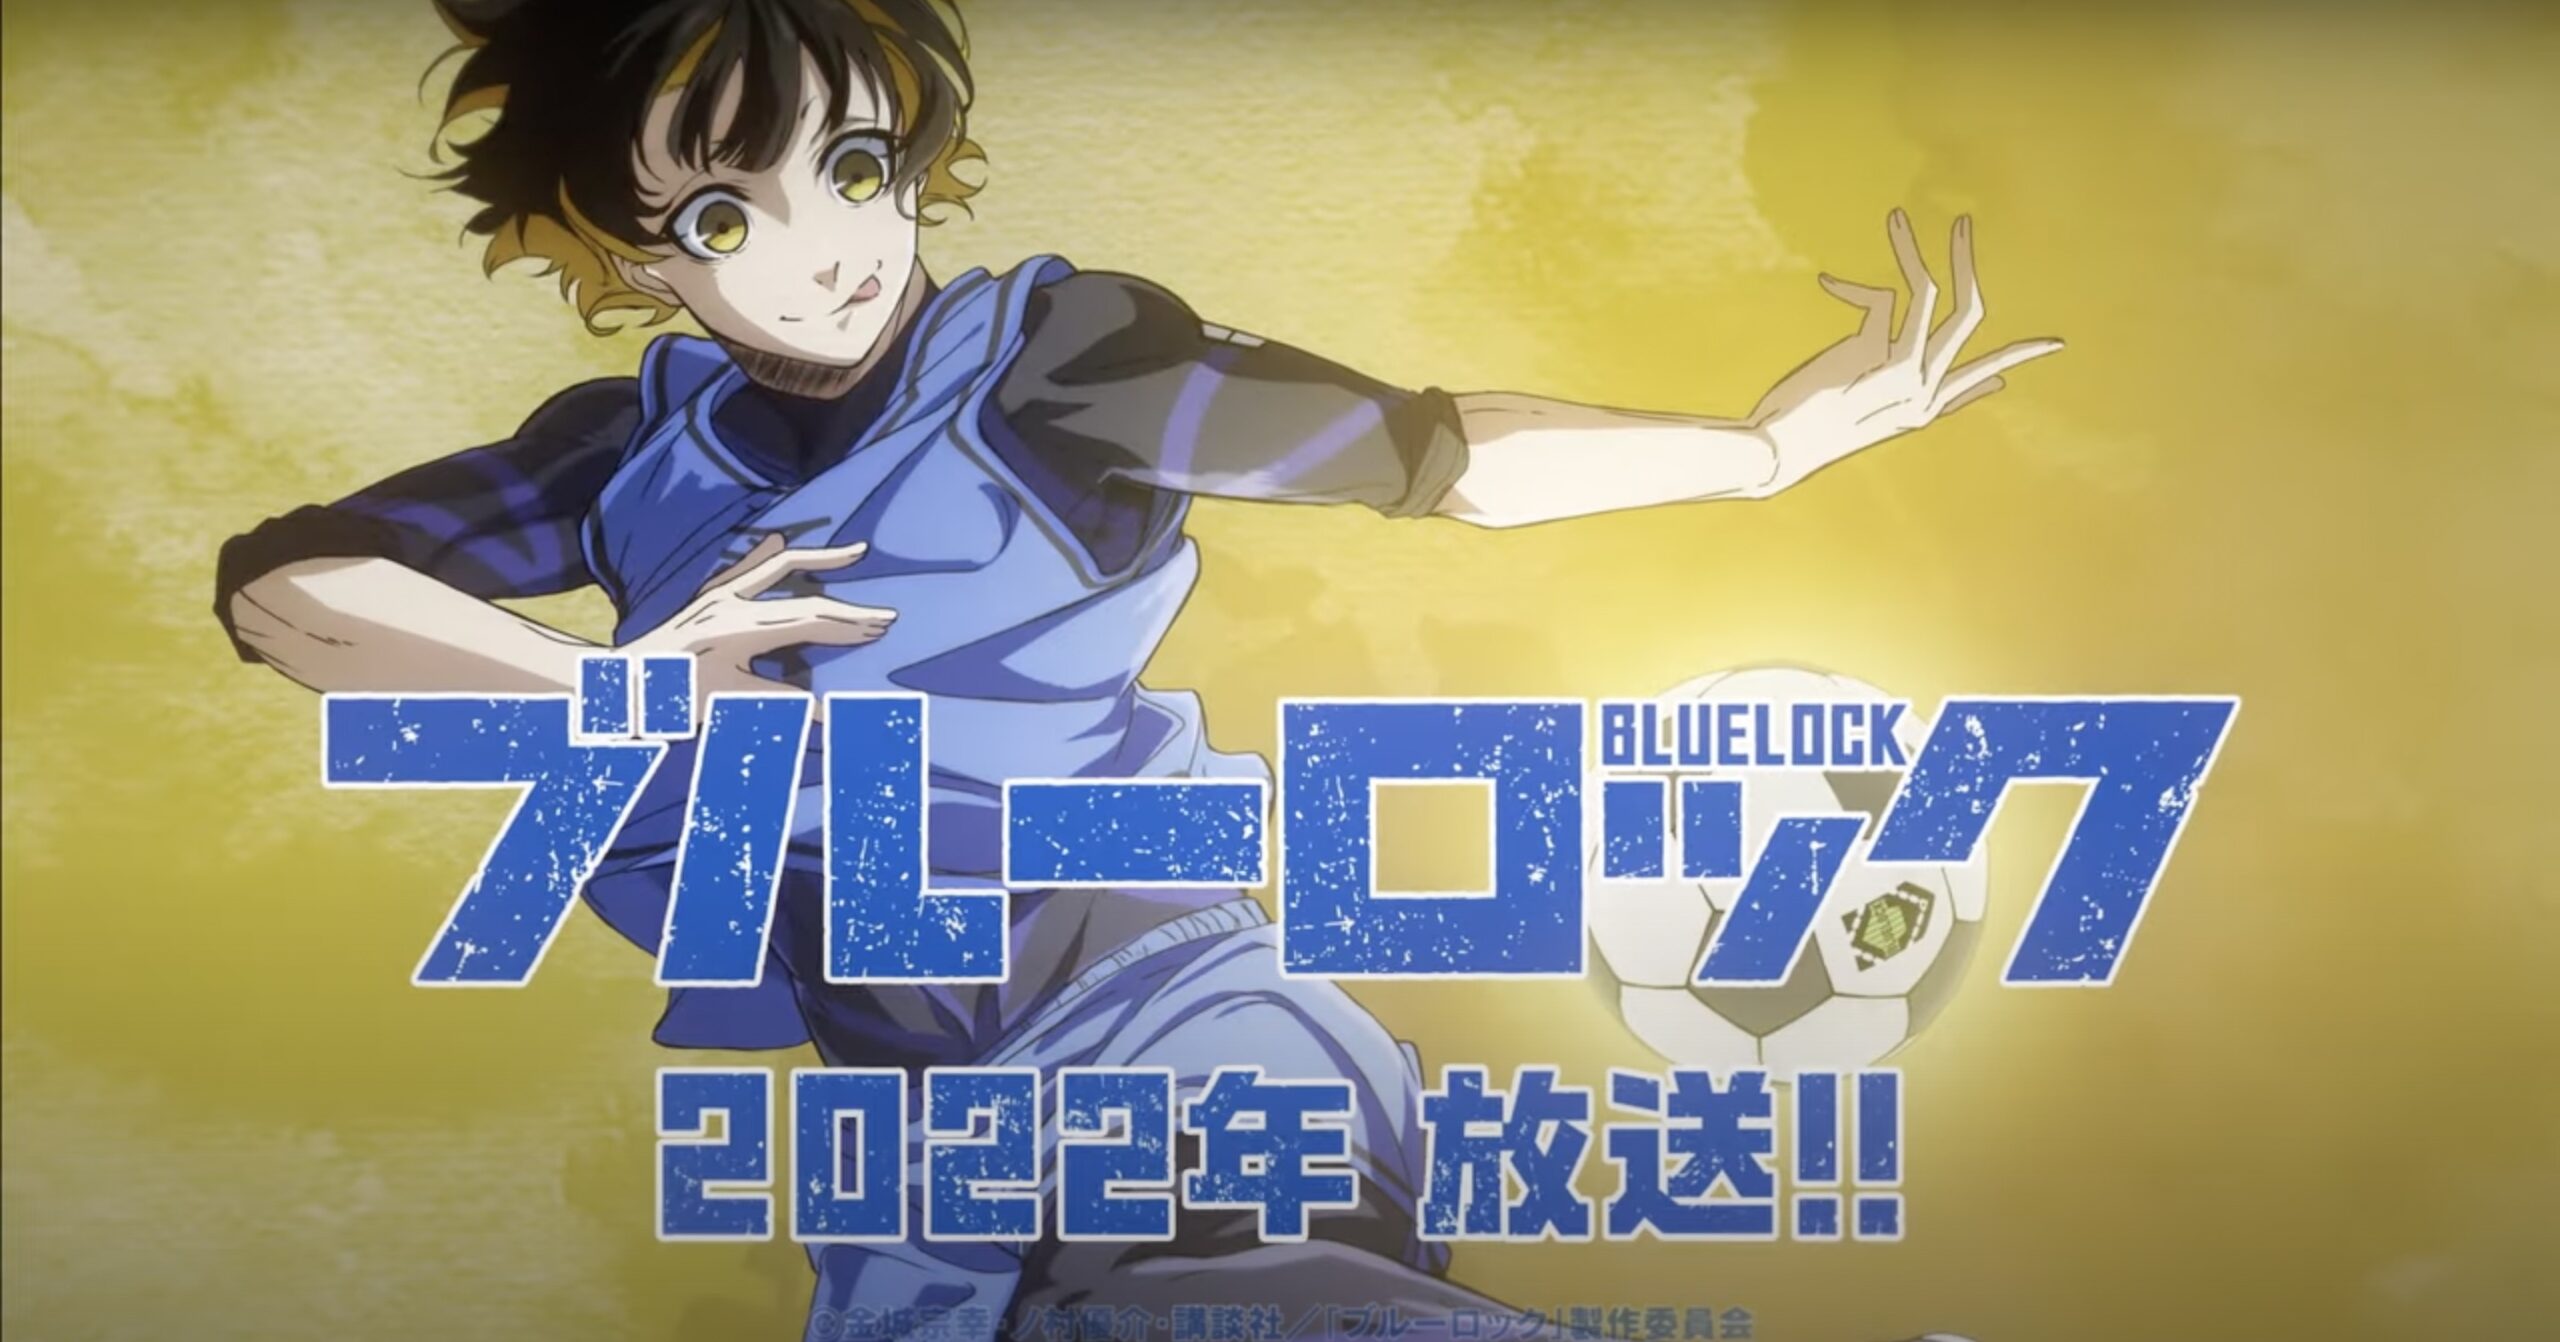 New Blue Lock Anime PV Puts the Spotlight on the Quirky Meguru Bachira